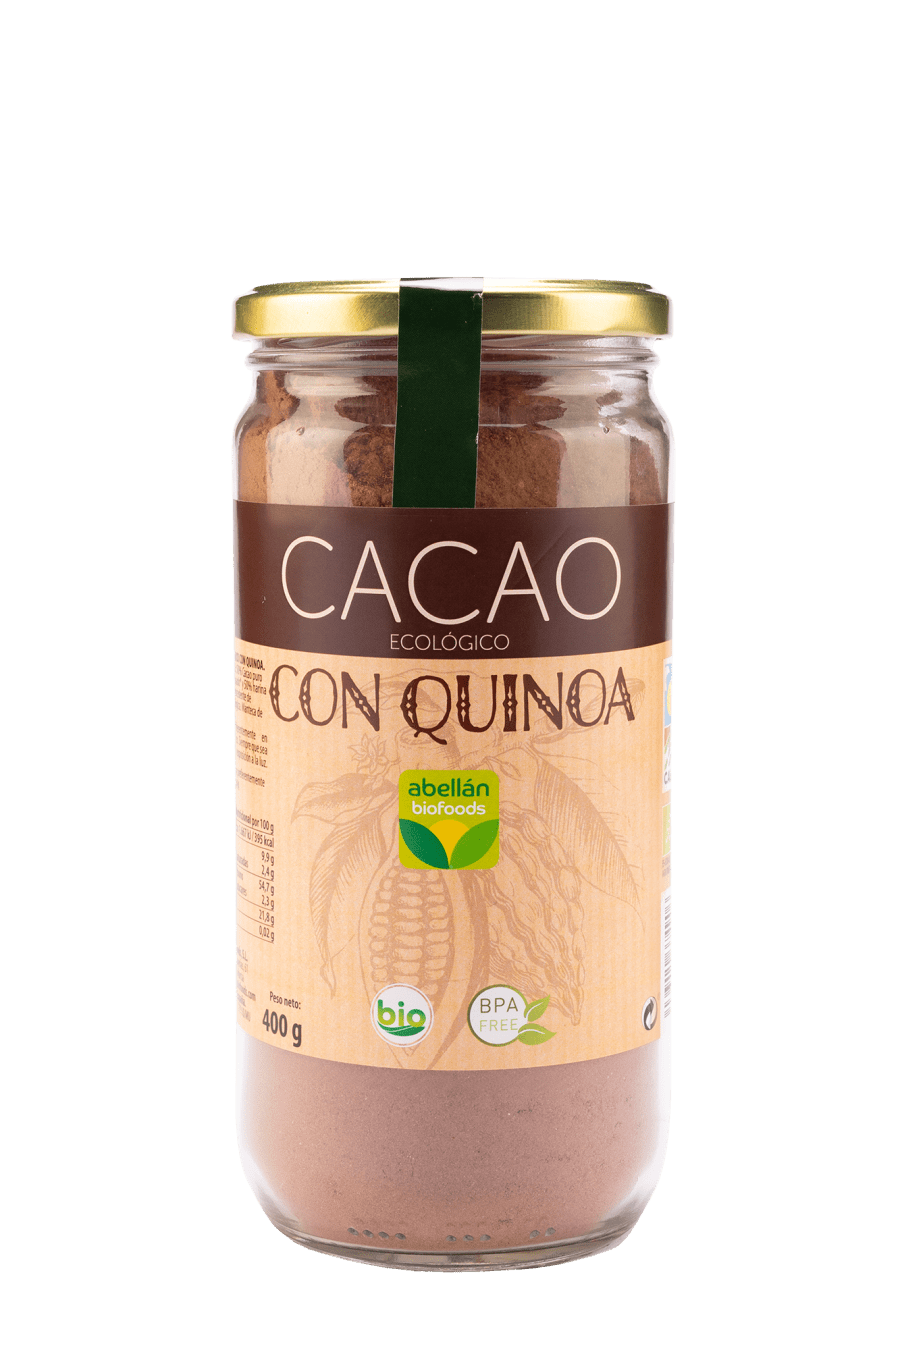 Cacao con quinoa